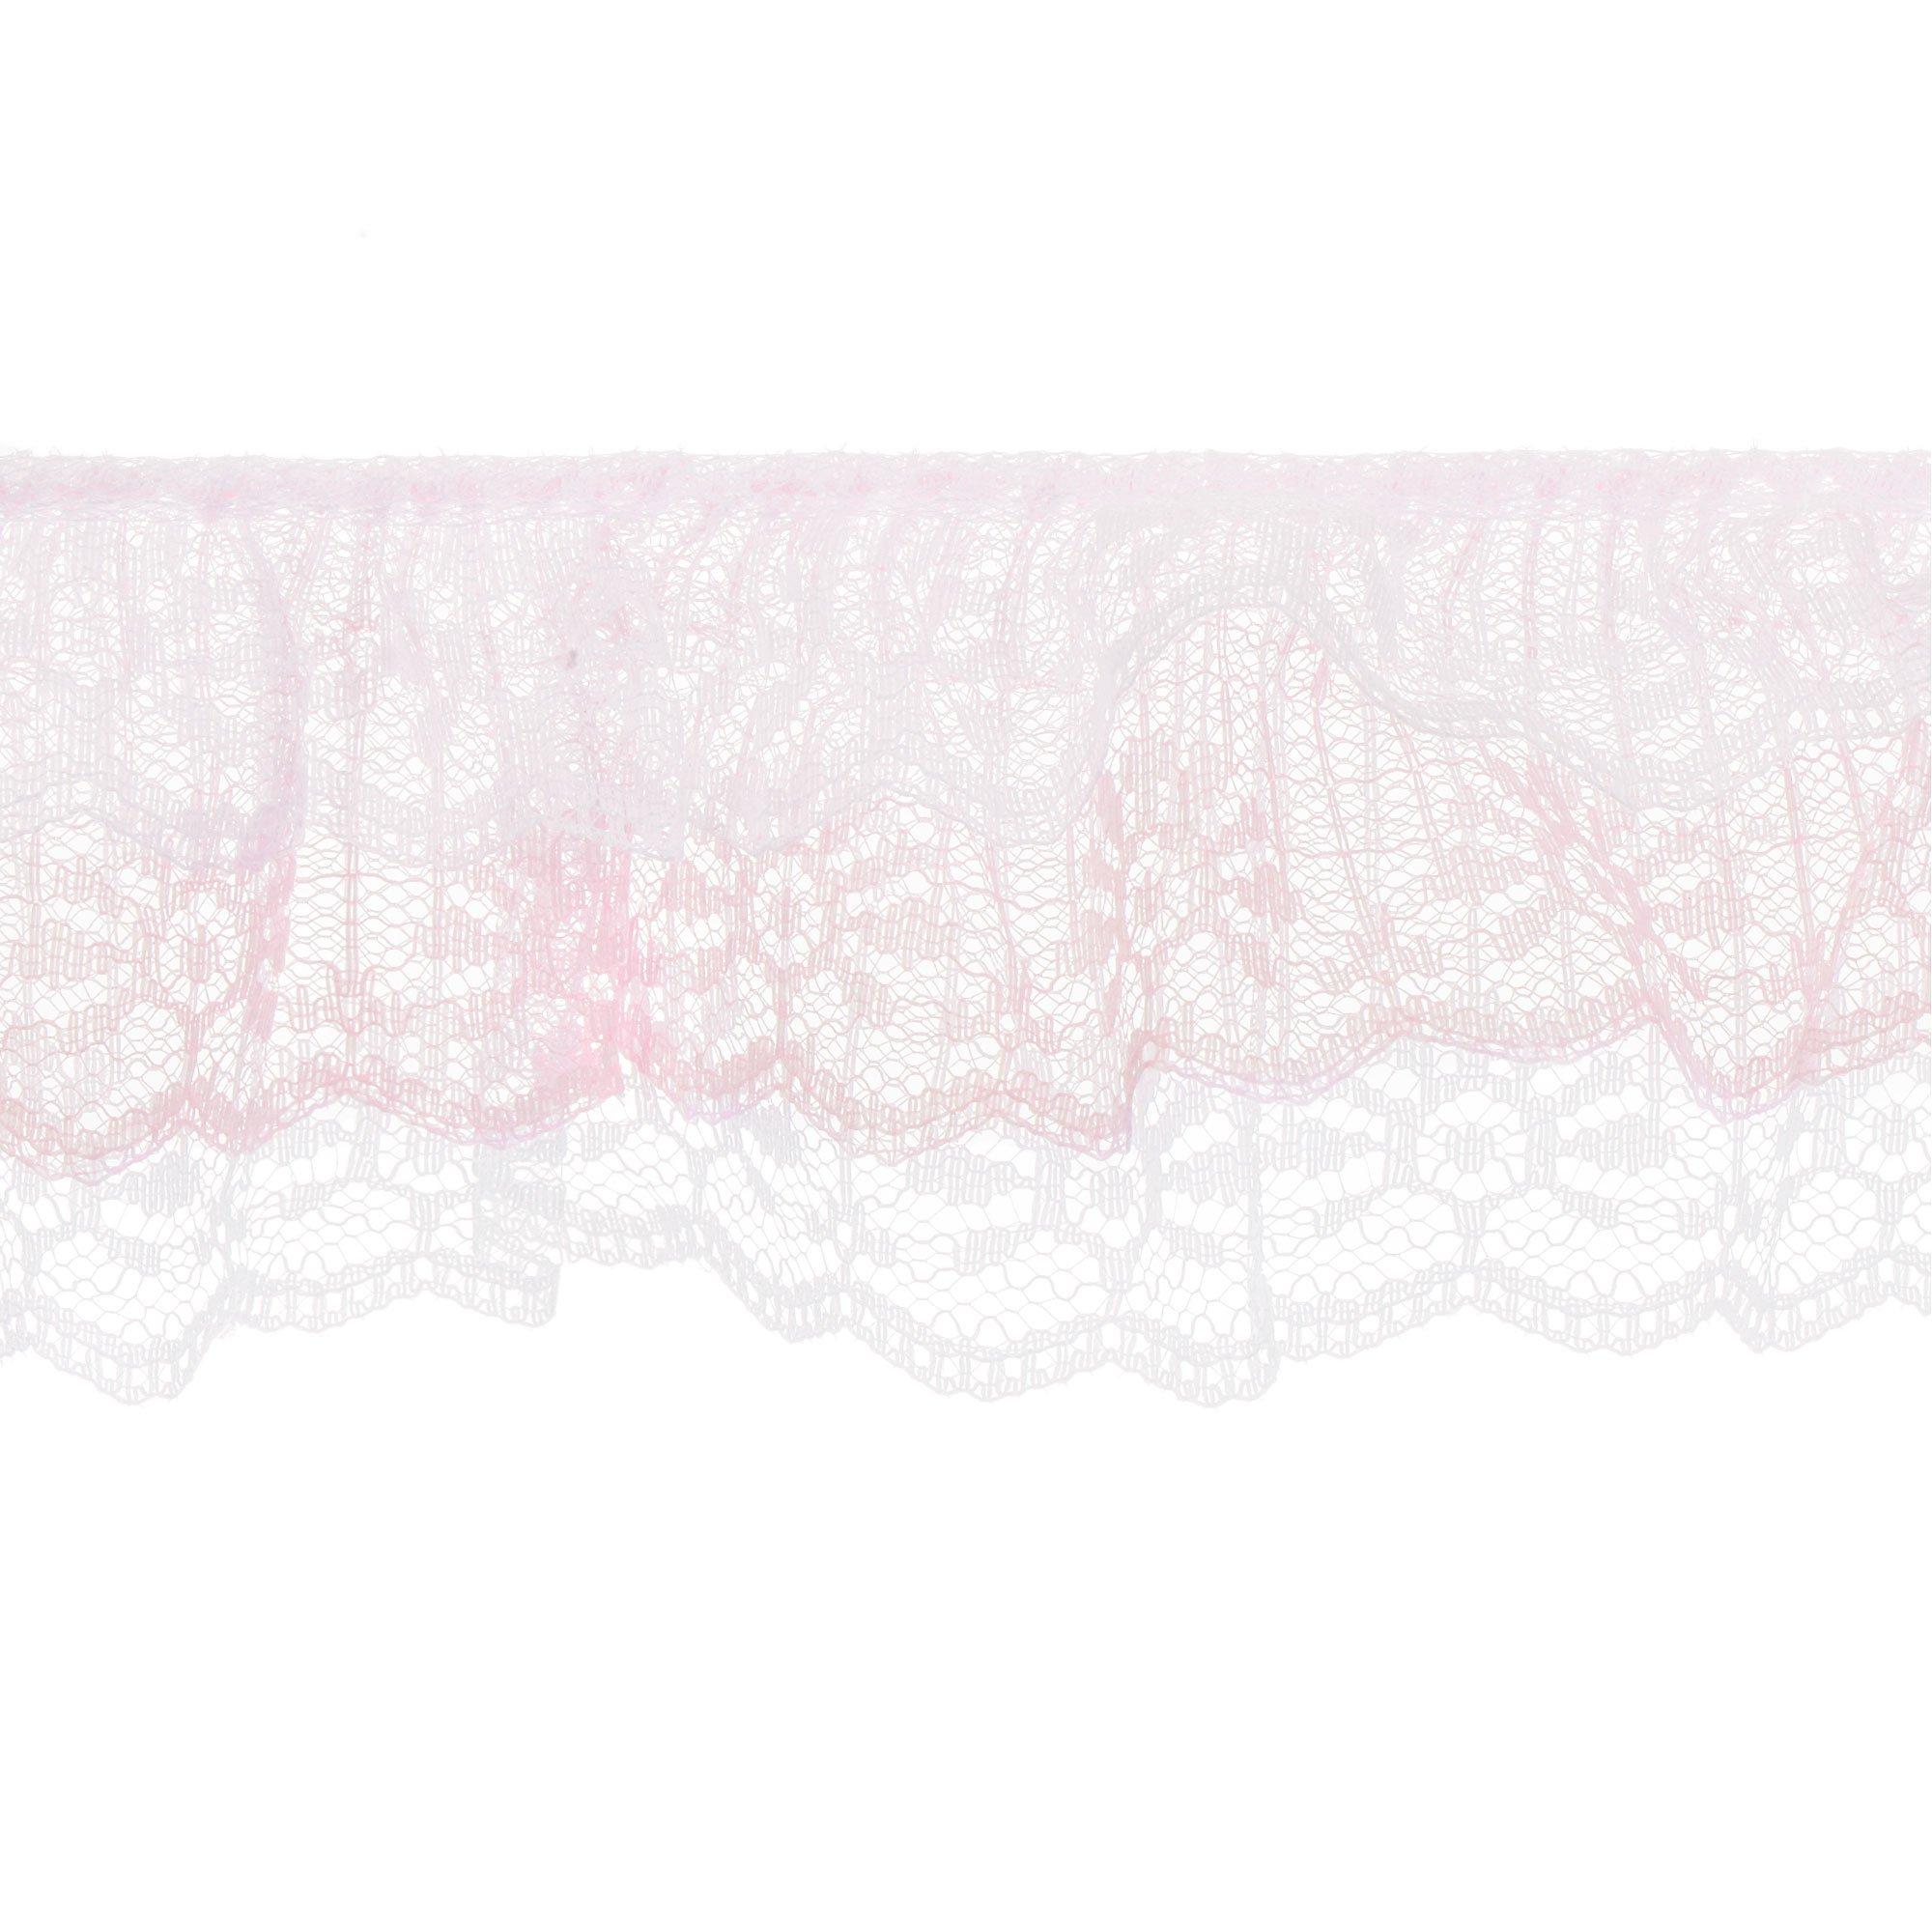 White & Pink Ruffled Lace Trim, Hobby Lobby